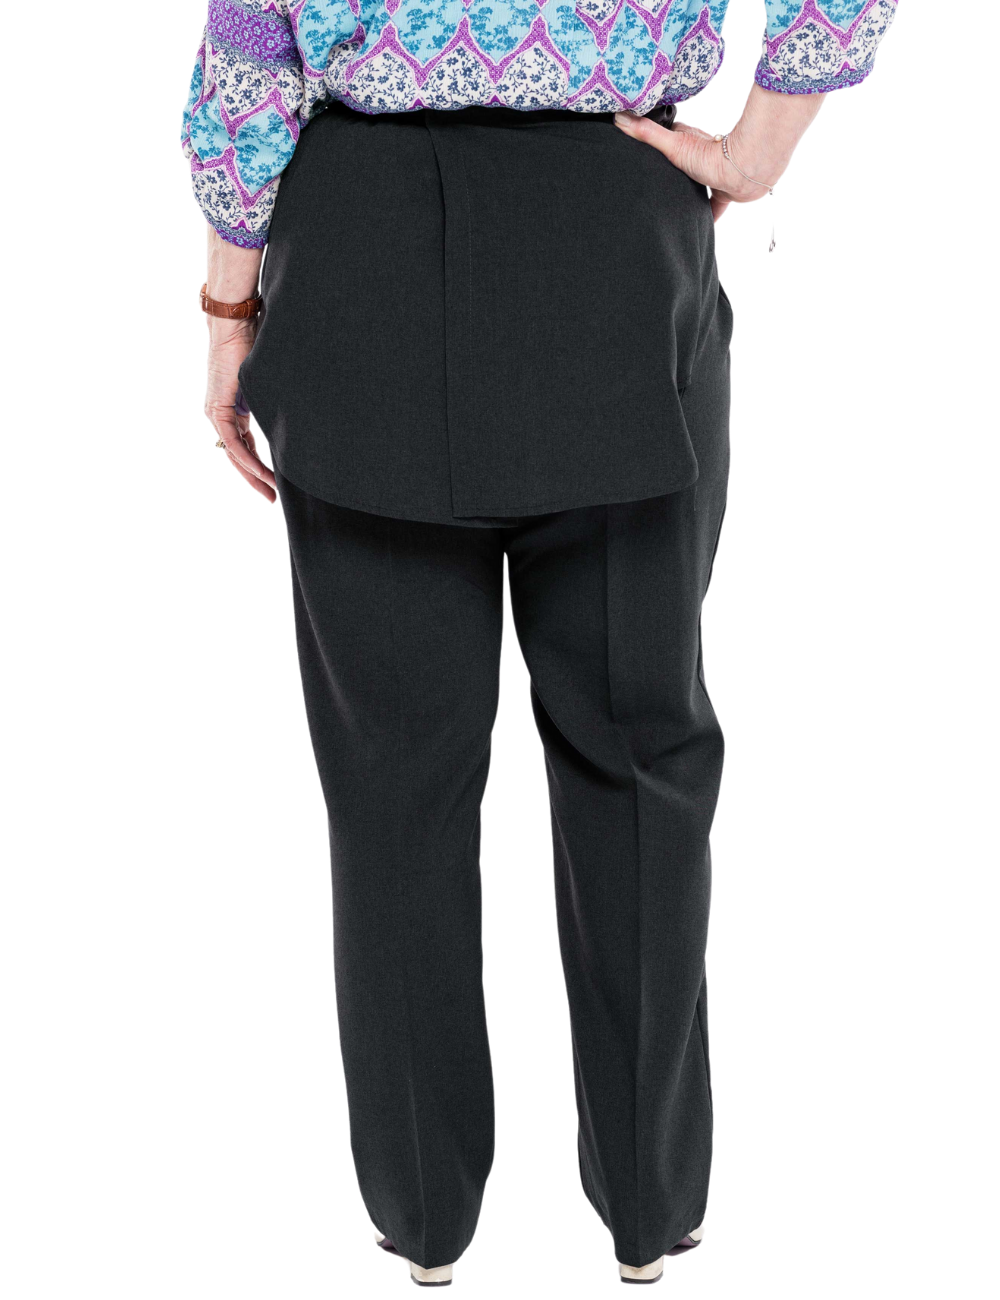 Capri Length Printed Back-Zip Sleep Suit Adaptive Clothing for Seniors,  Disabled & Elderly Care